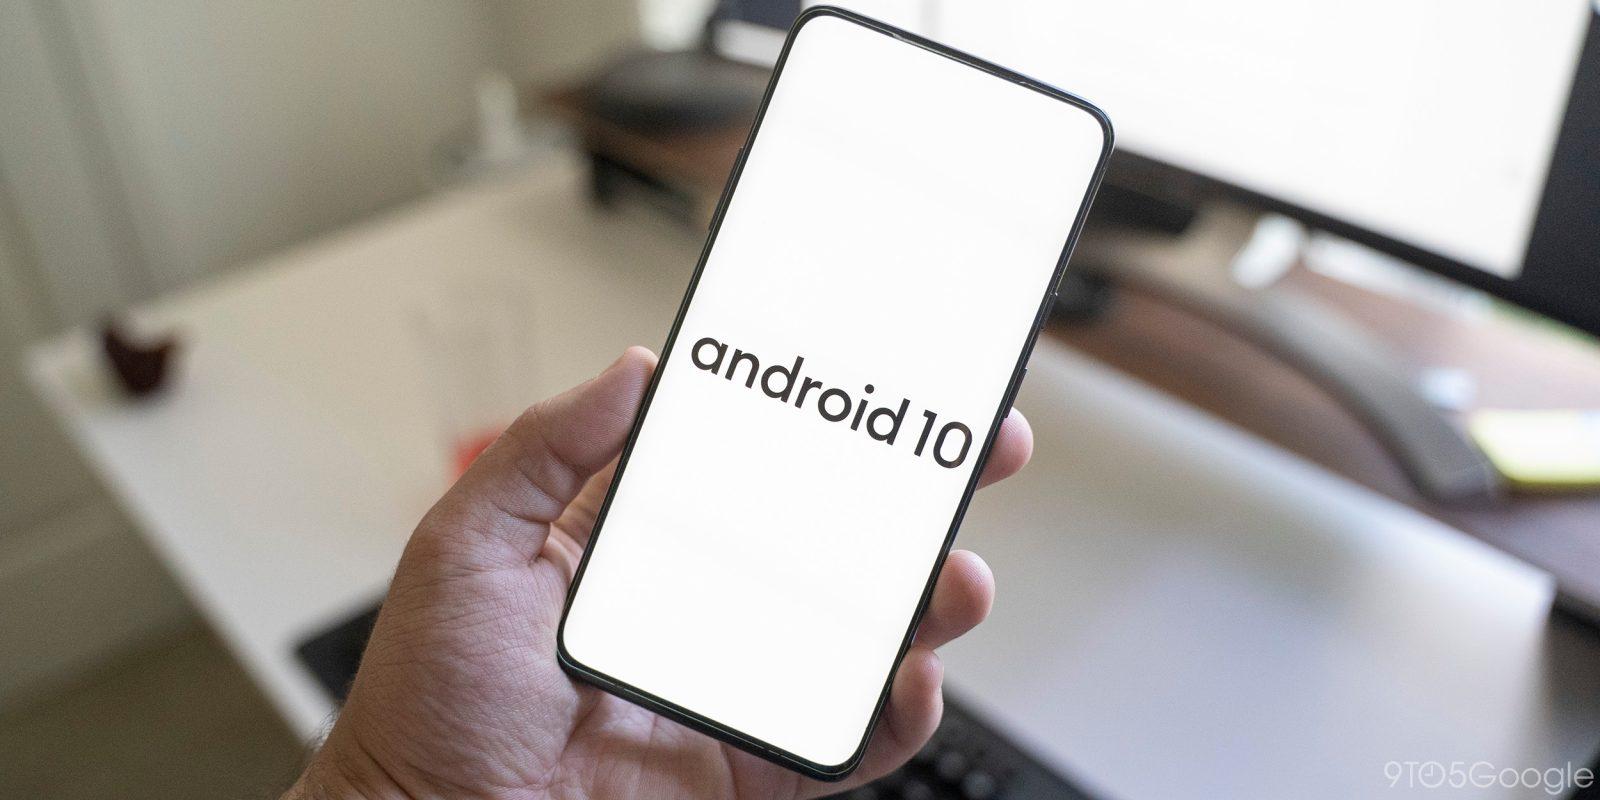 More information about "Κυκλοφόρησε επίσημα το Android 10. Τα τηλέφωνα Google Pixel λαμβάνουν ήδη την αναβάθμιση"